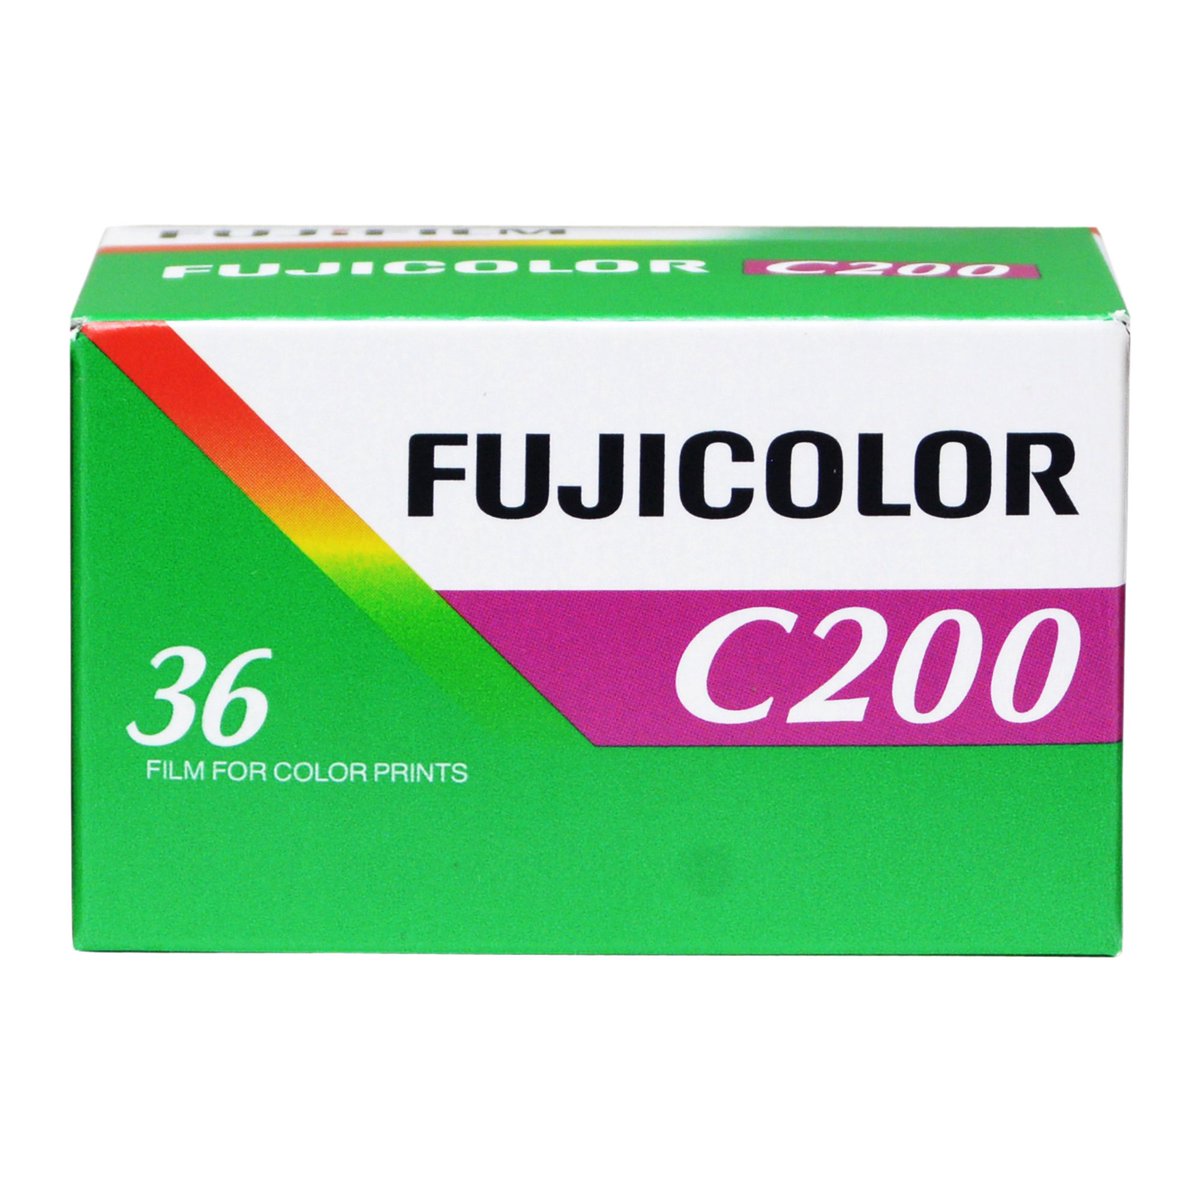 : Fuji C200: Kodak Ektar 100For Changmin, I think they used a Fuji C200. For New, it could be the same or Ektar 100. #TBZ카메라  #THEBOYZ  #더보이즈  #큐  #뉴  #Q  #NEW  #35mm